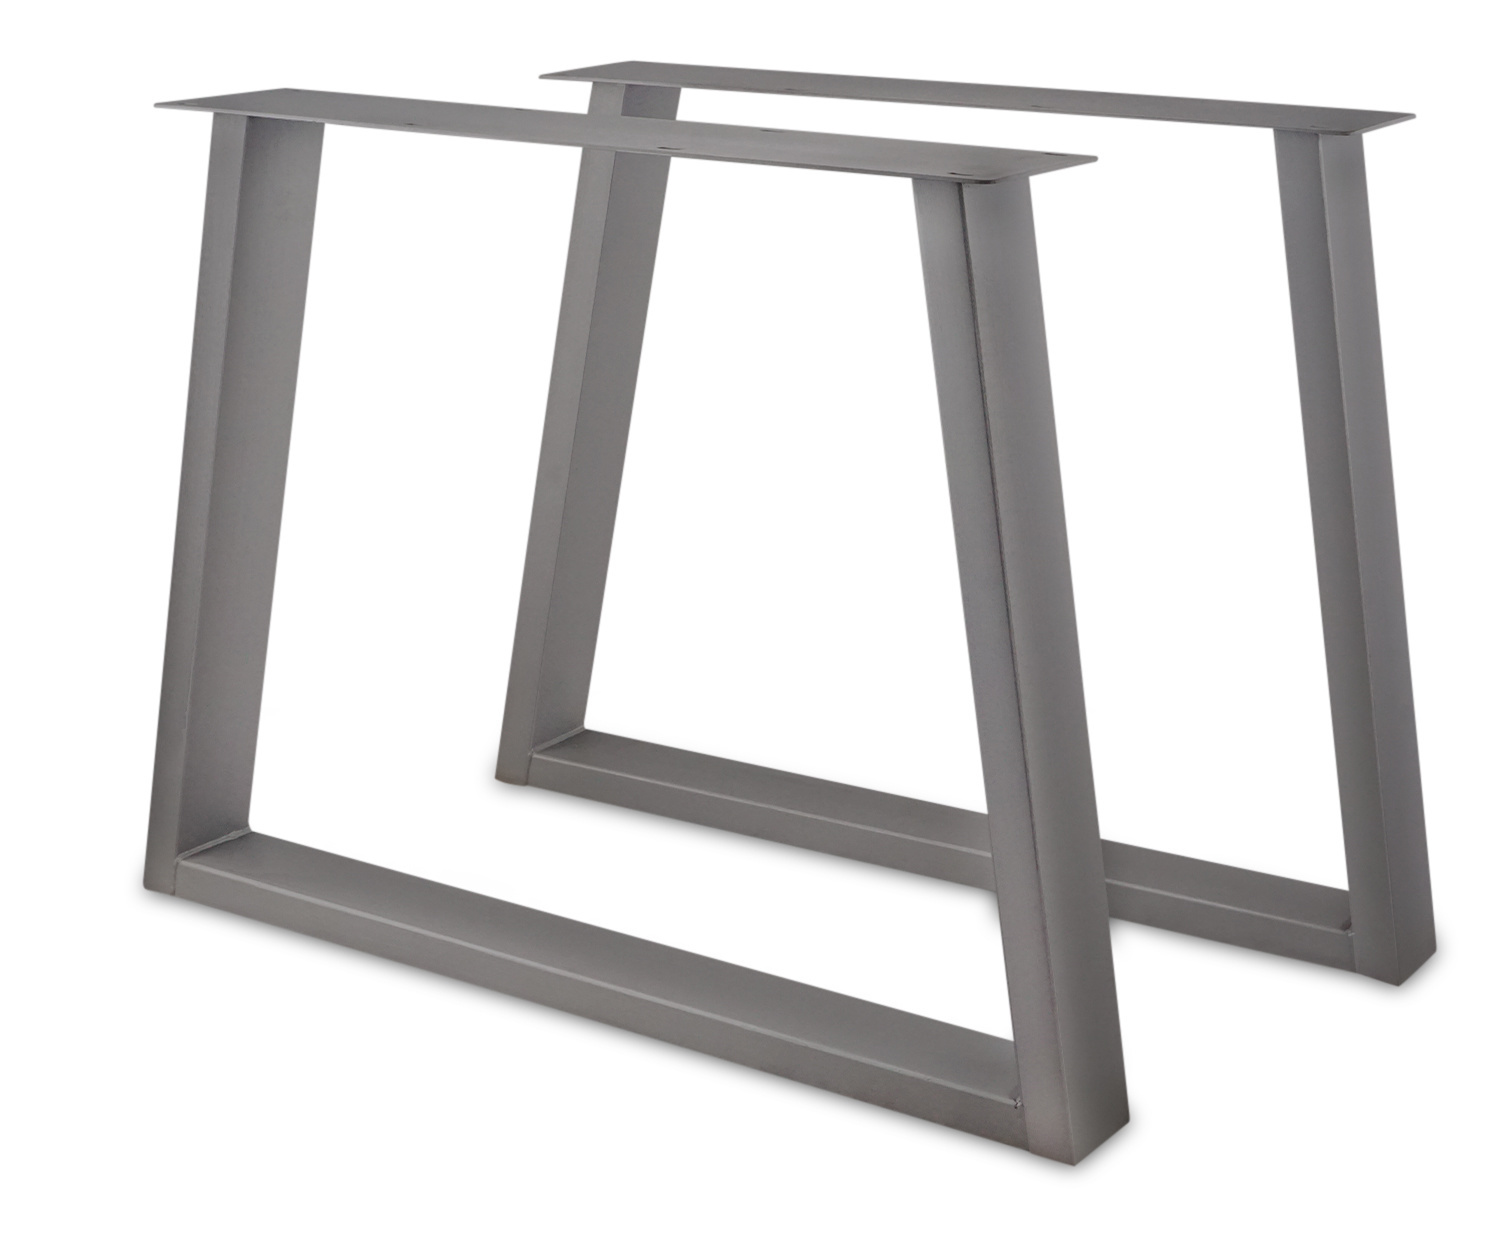  RVS Trapeze tafelpoten SLANK (SET) 2x10 cm - 78-95 cm breed - 72 cm hoog - Trapezium poot - Geborsteld INOX 304